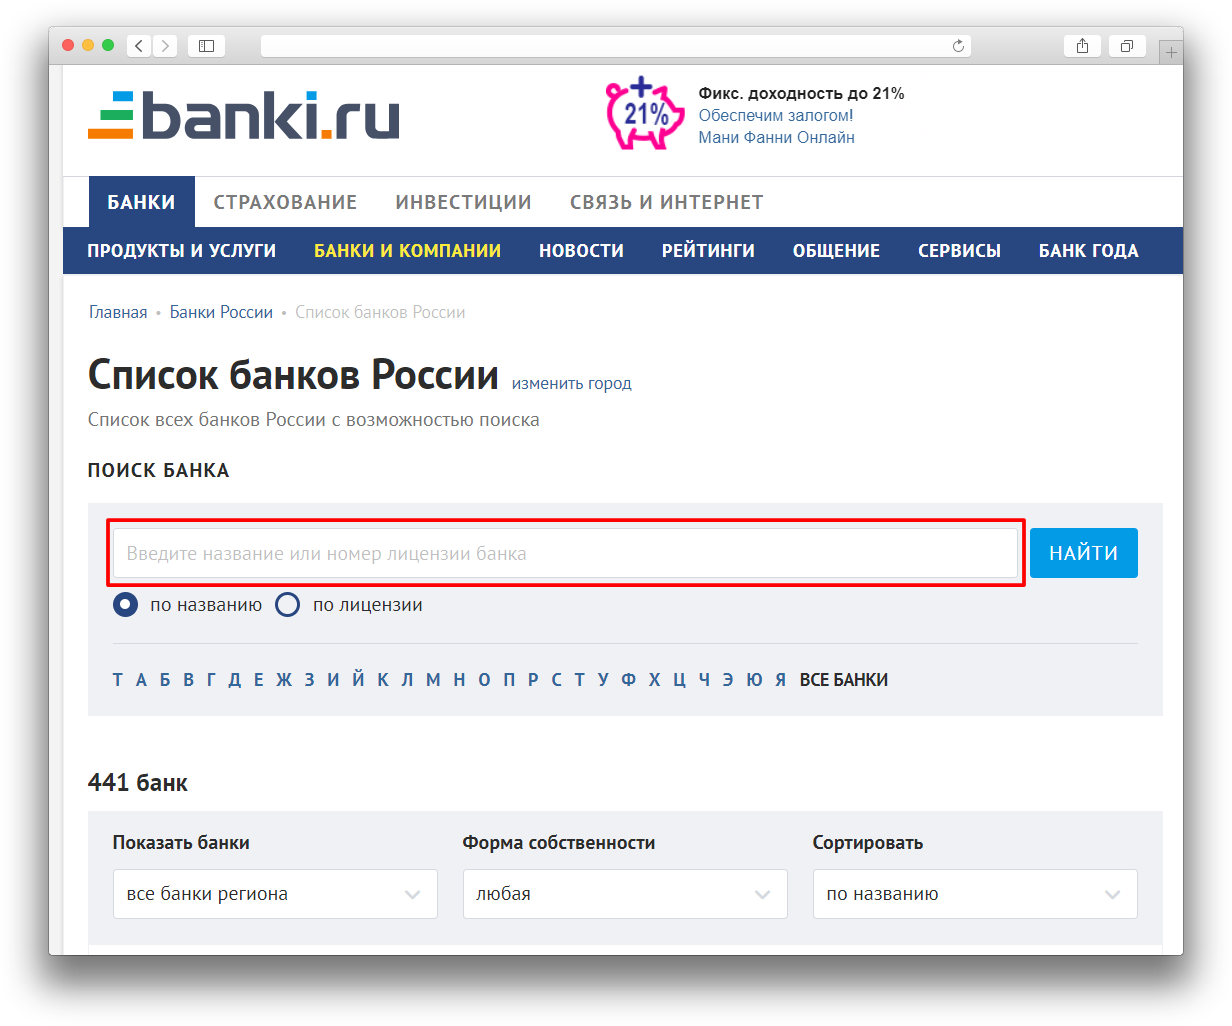 banki.ru interface